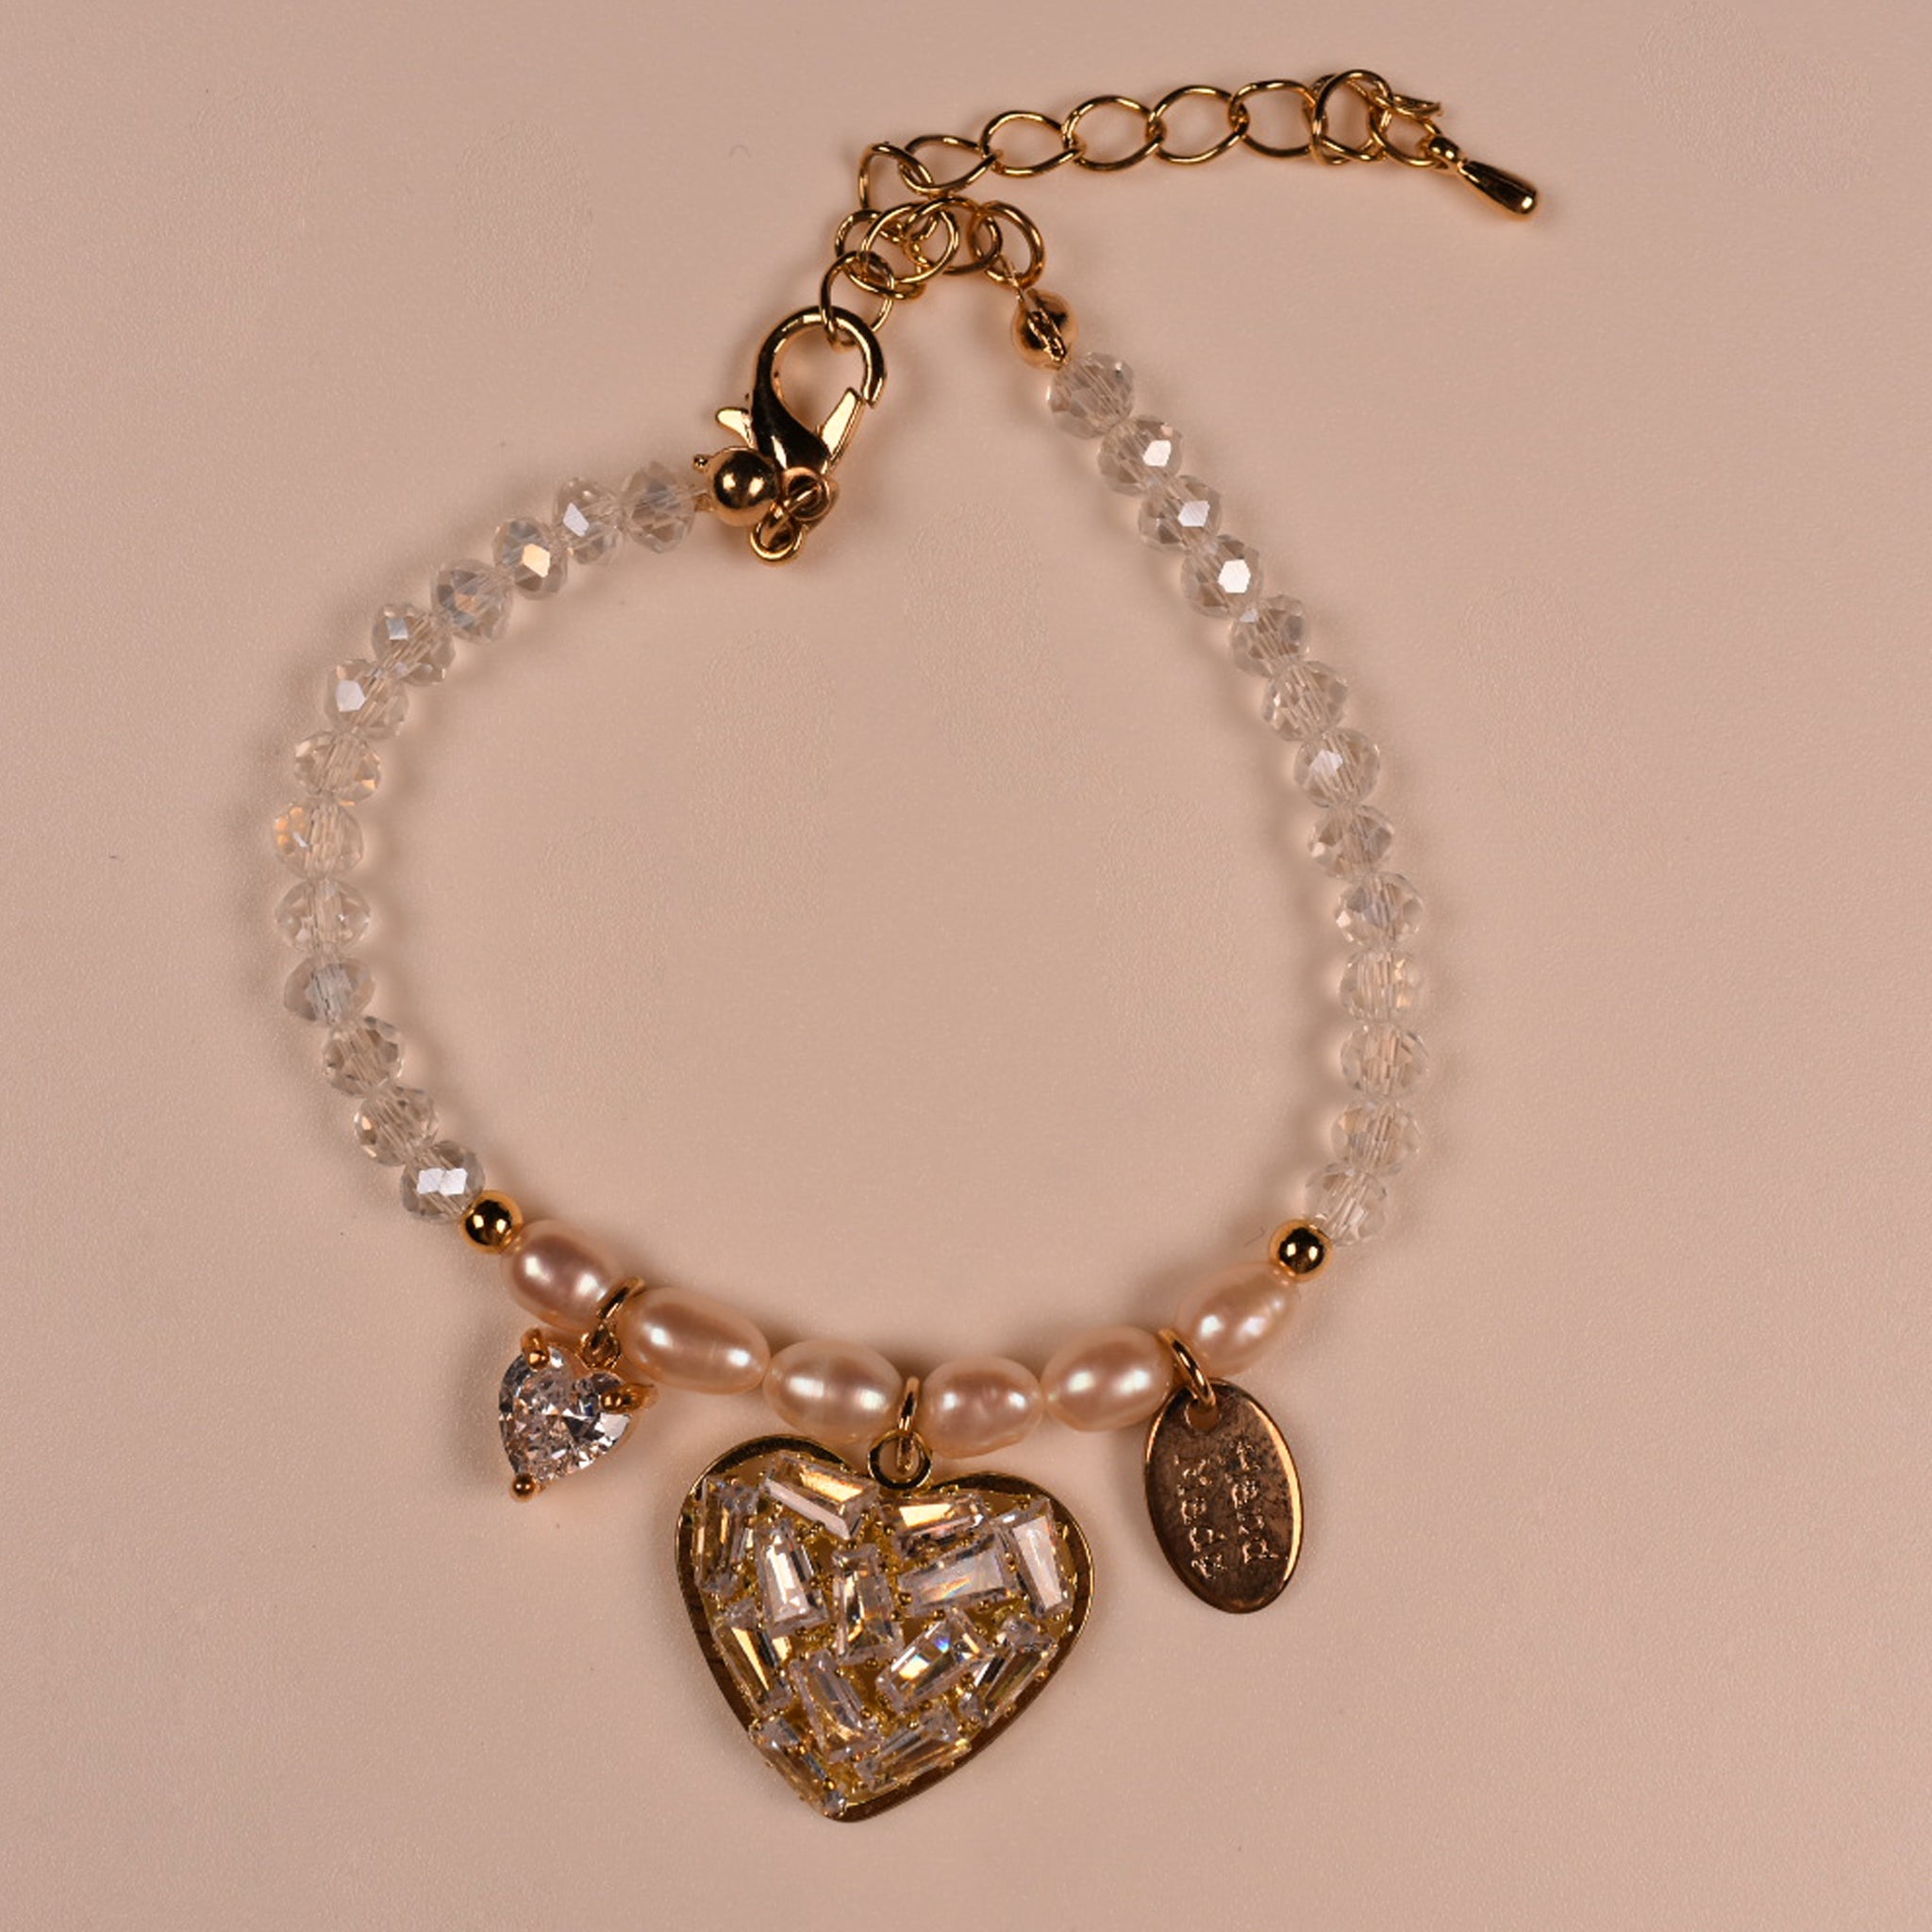 Pearls of Korea - The Flourscent Heart Bracelet